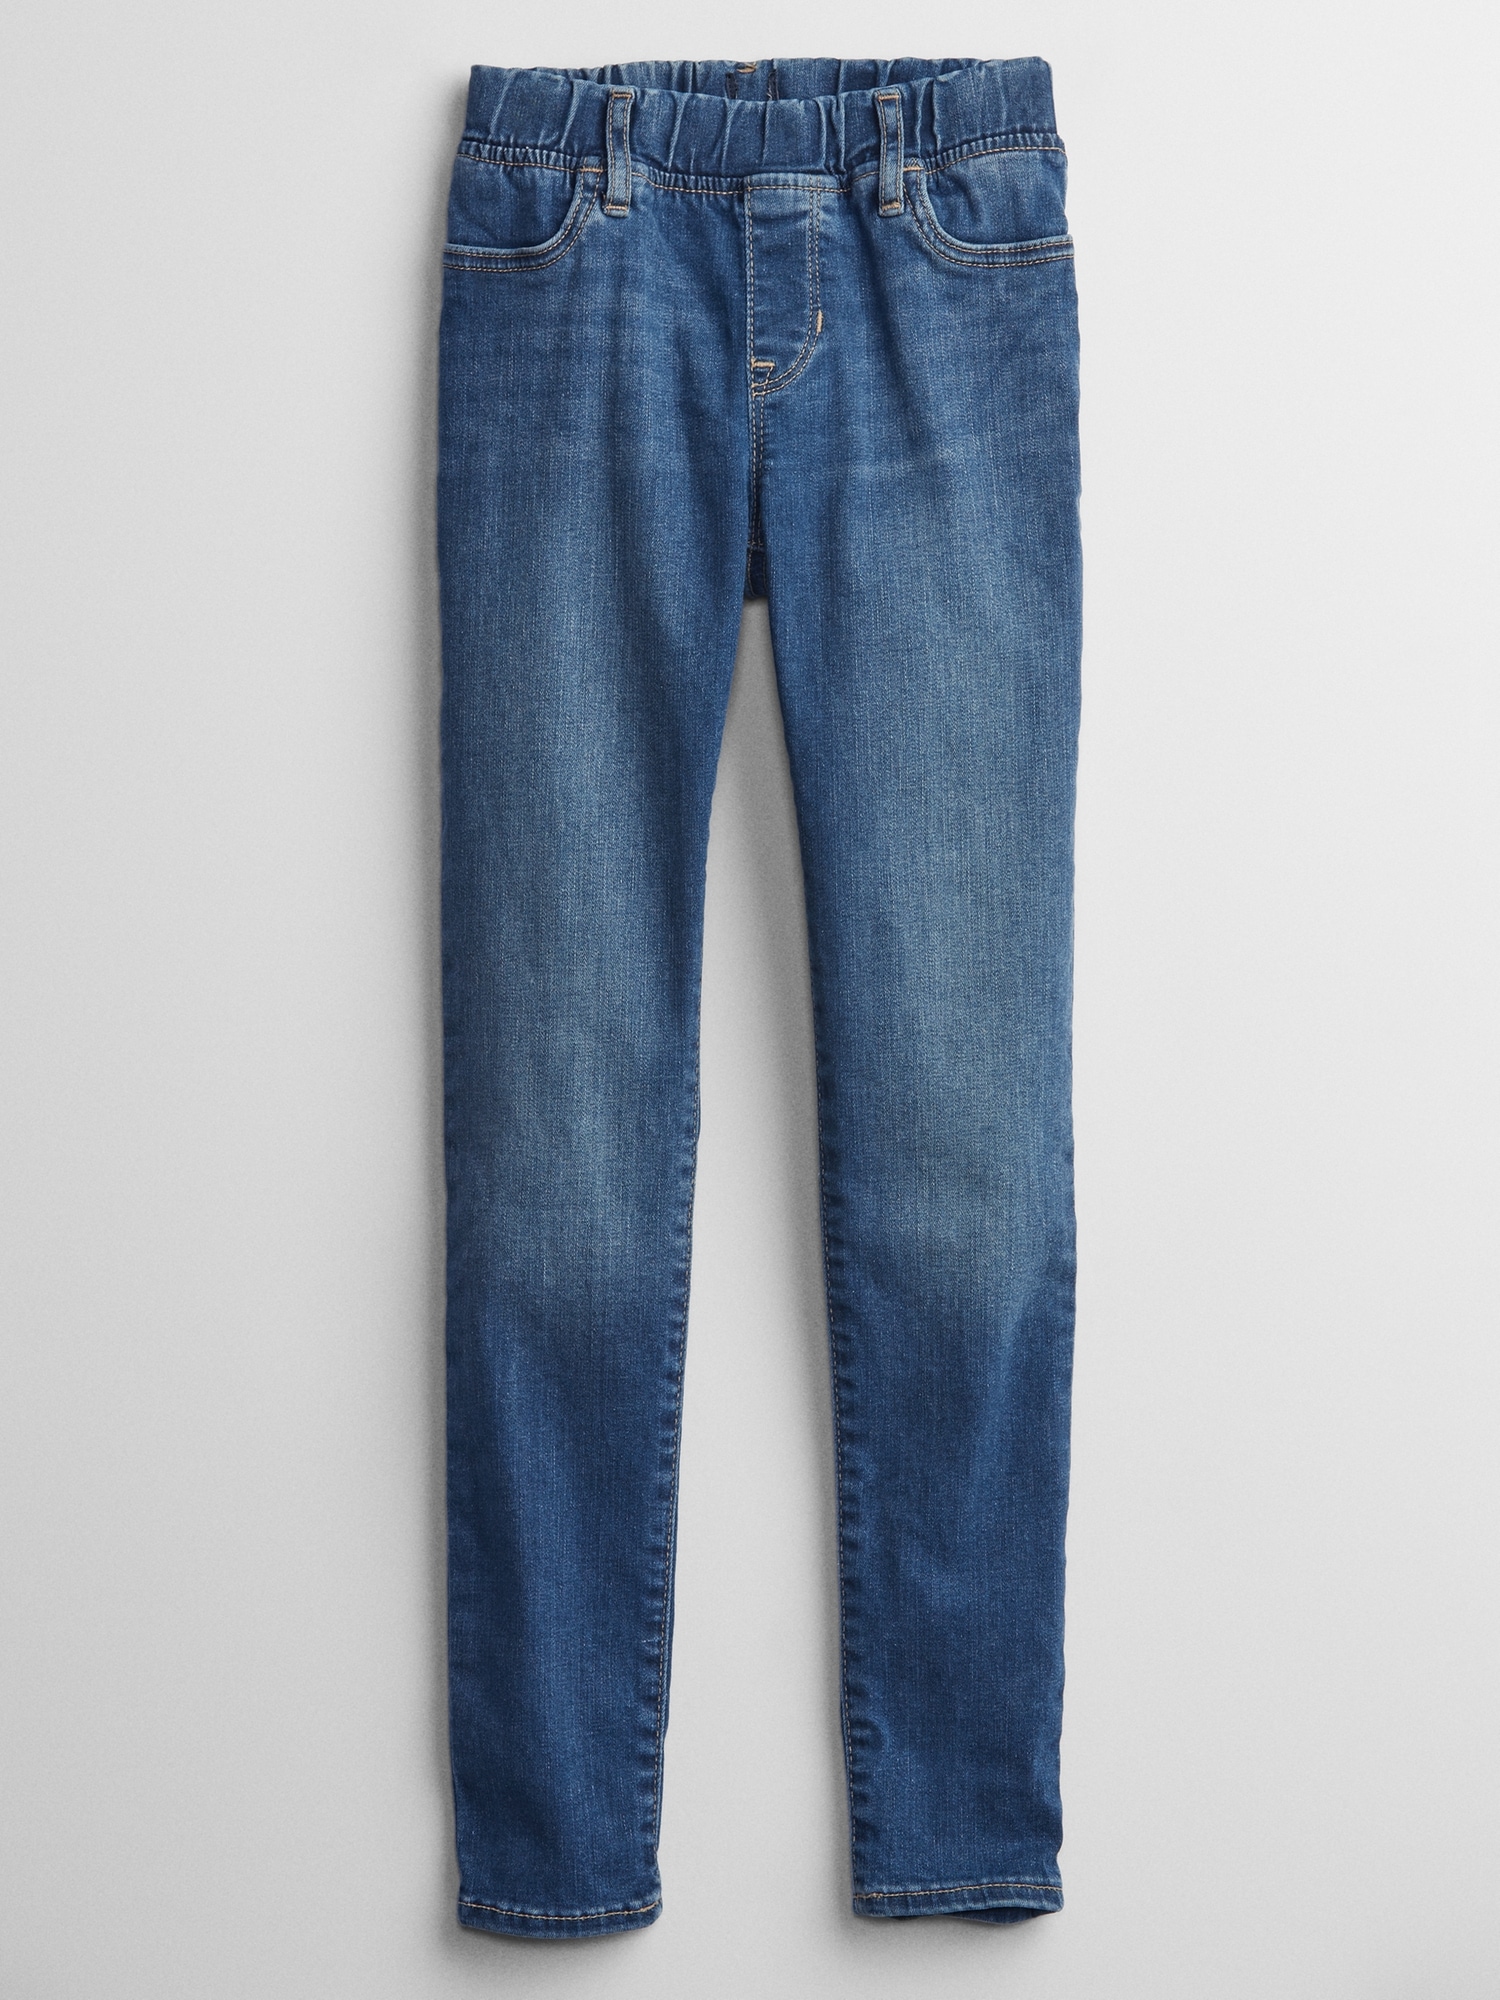 Kids Super Skinny Pull-On Jeans | Gap Factory